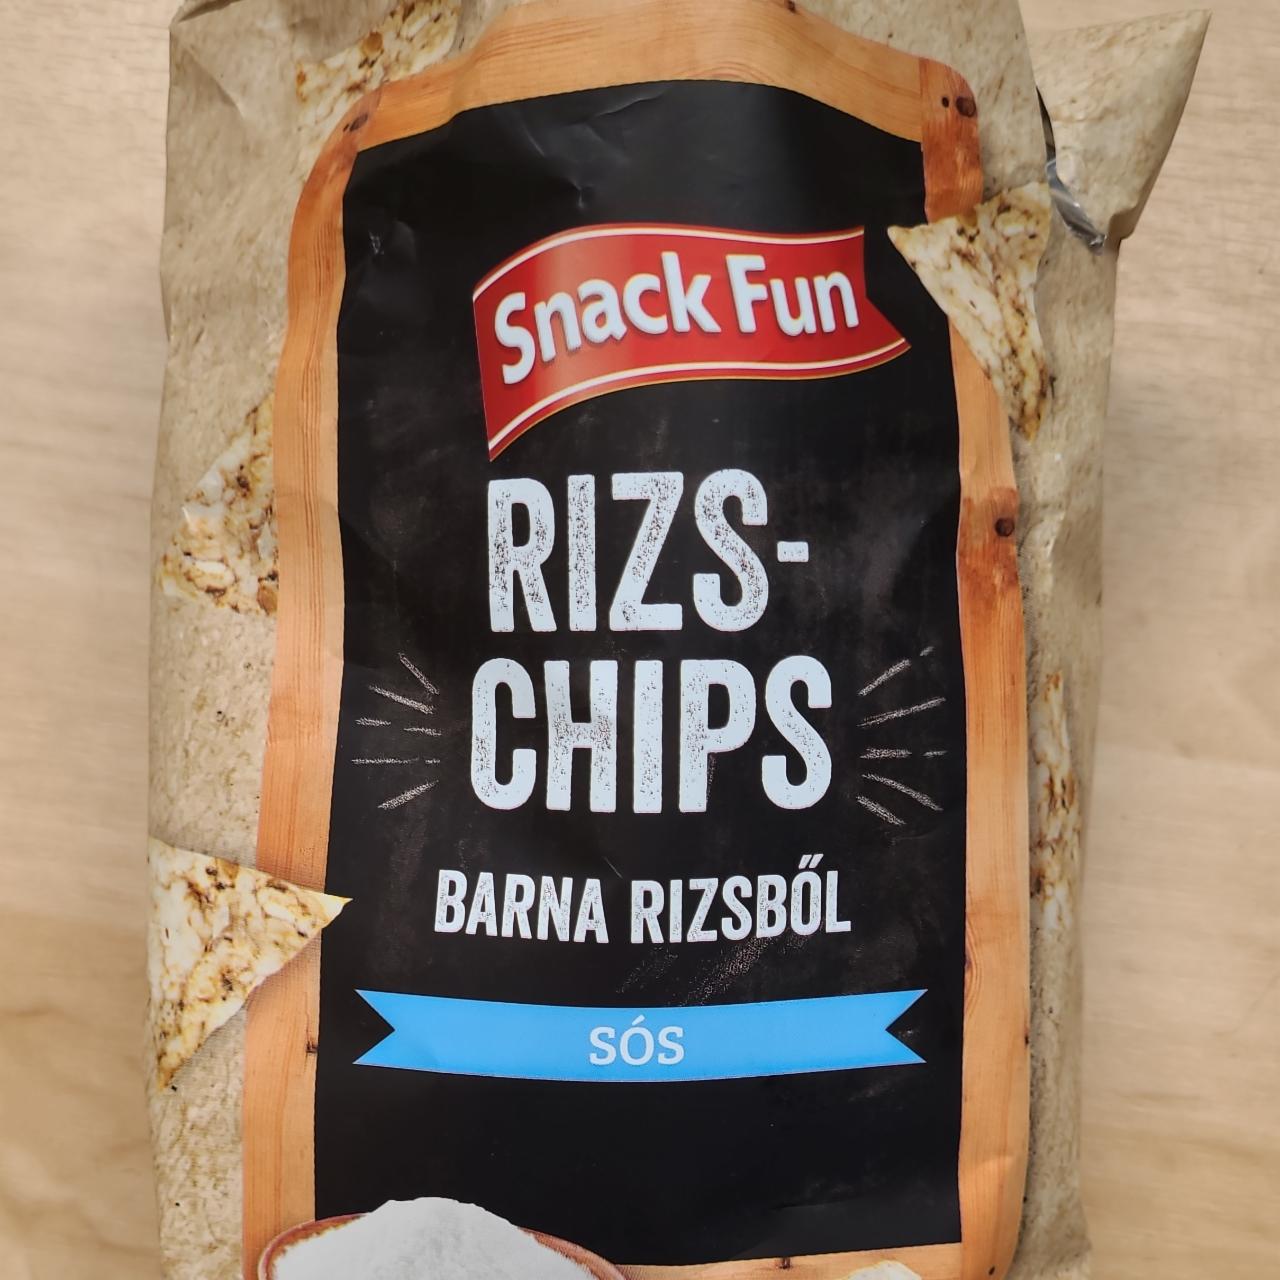 Képek - Aldi barna rizschips sós Snack Fun